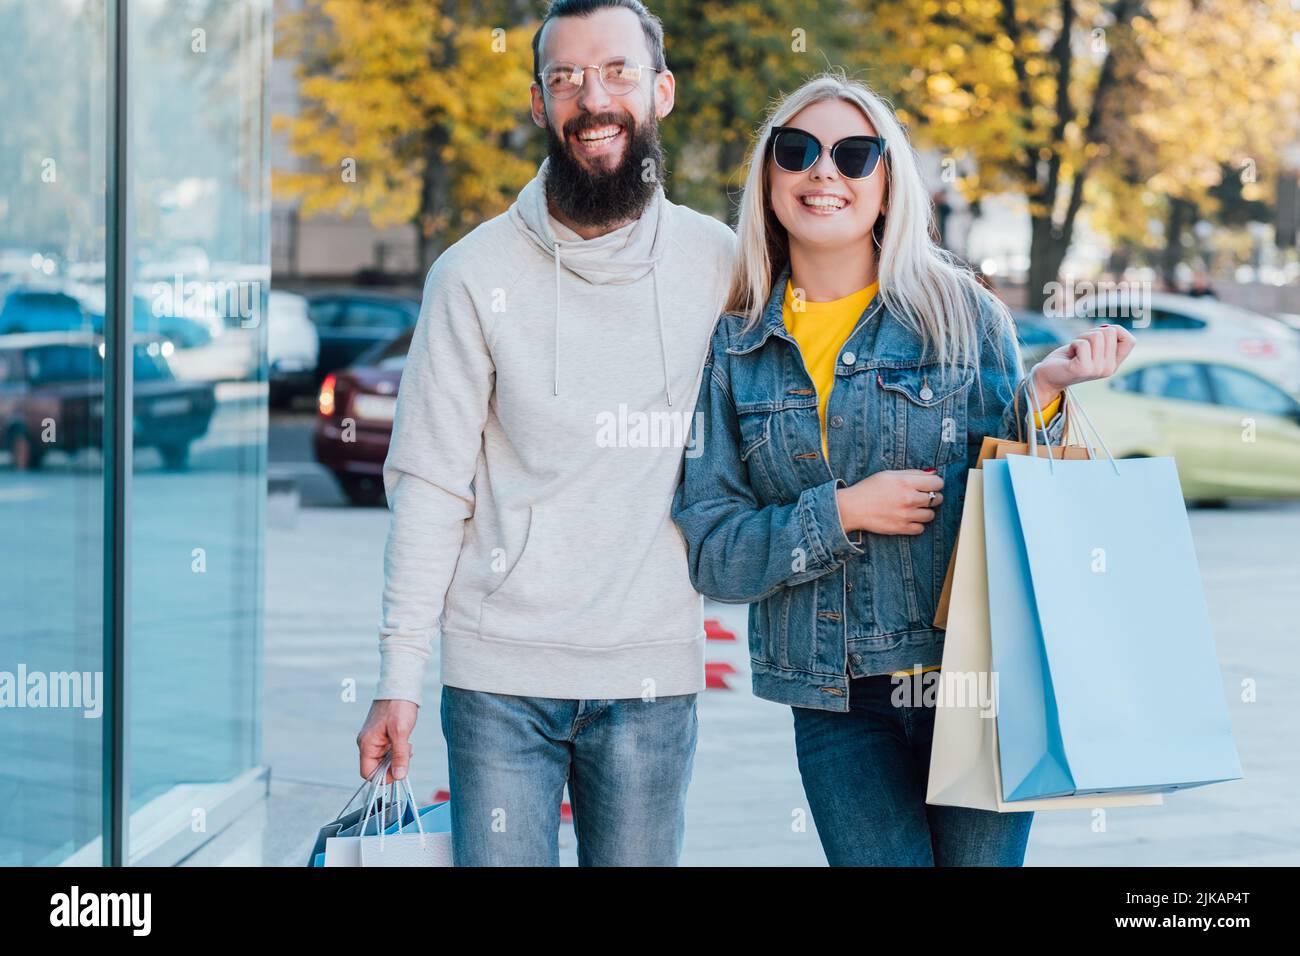 shopaholics lifestyle couple city center fall Stock Photo